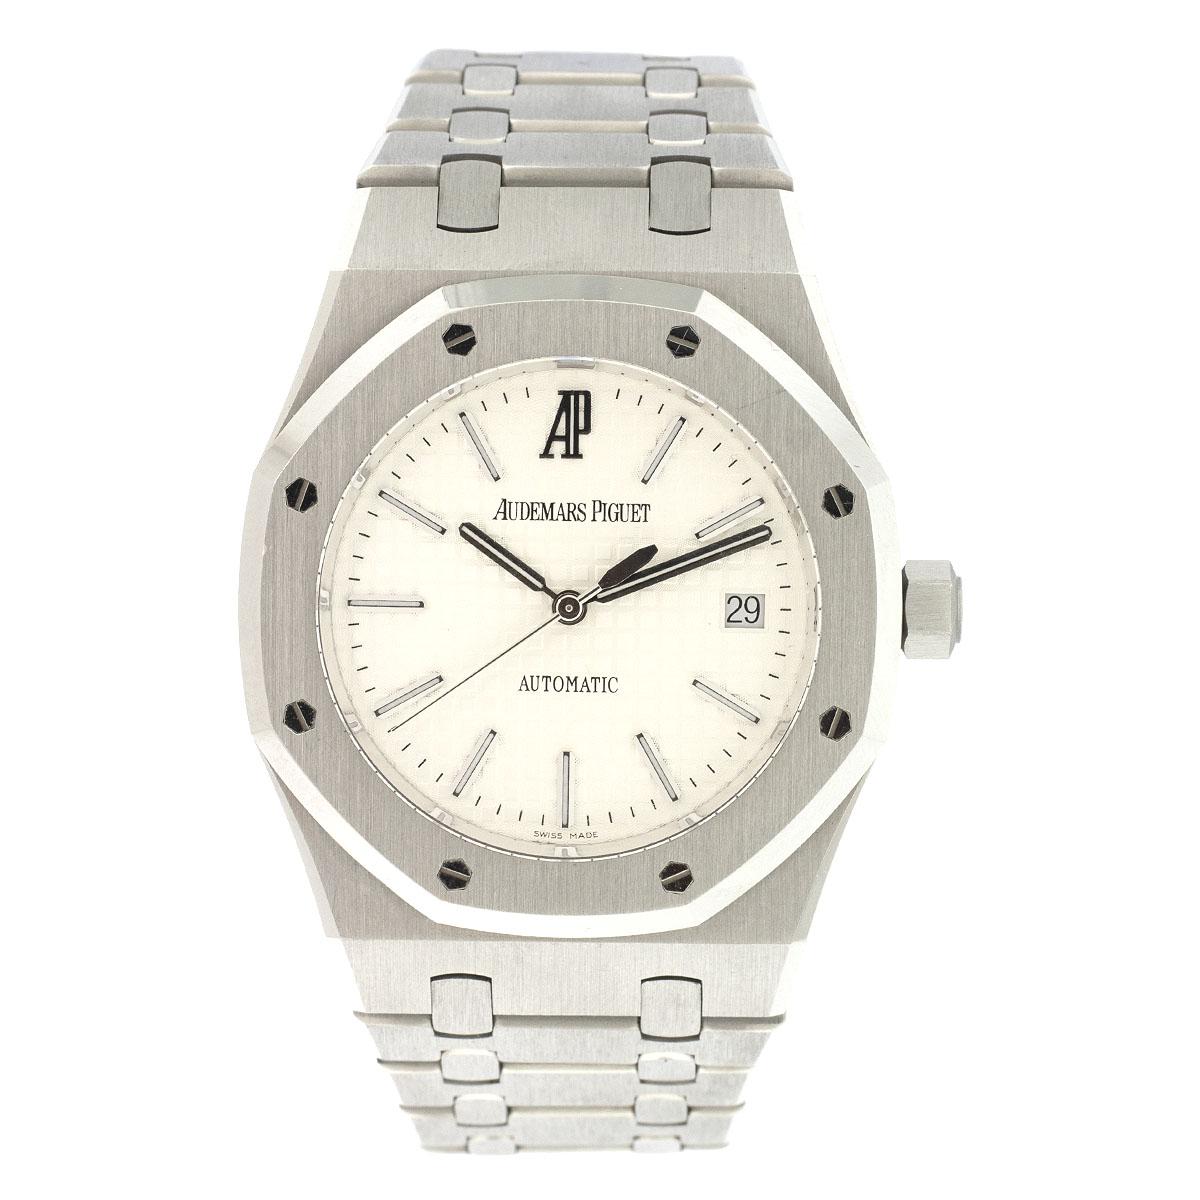 Audemars Piguet 15300 Royal Oak White Dial Watch In Excellent Condition For Sale In Boca Raton, FL